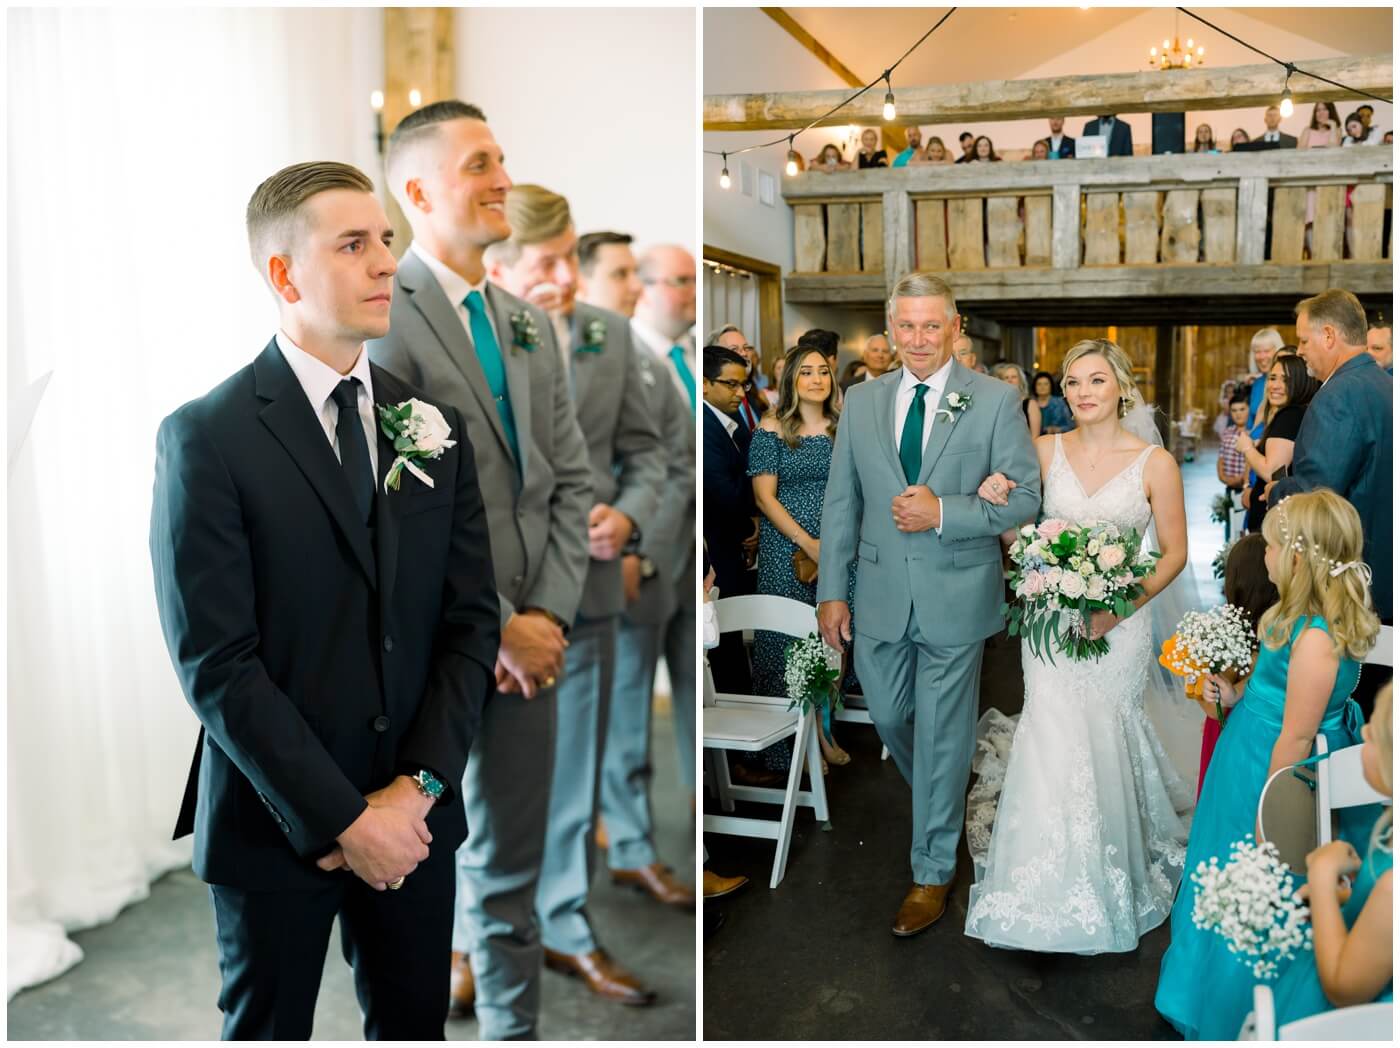 Beckendorff Farms | an emotional groom as he sees his bride walk down the aisle